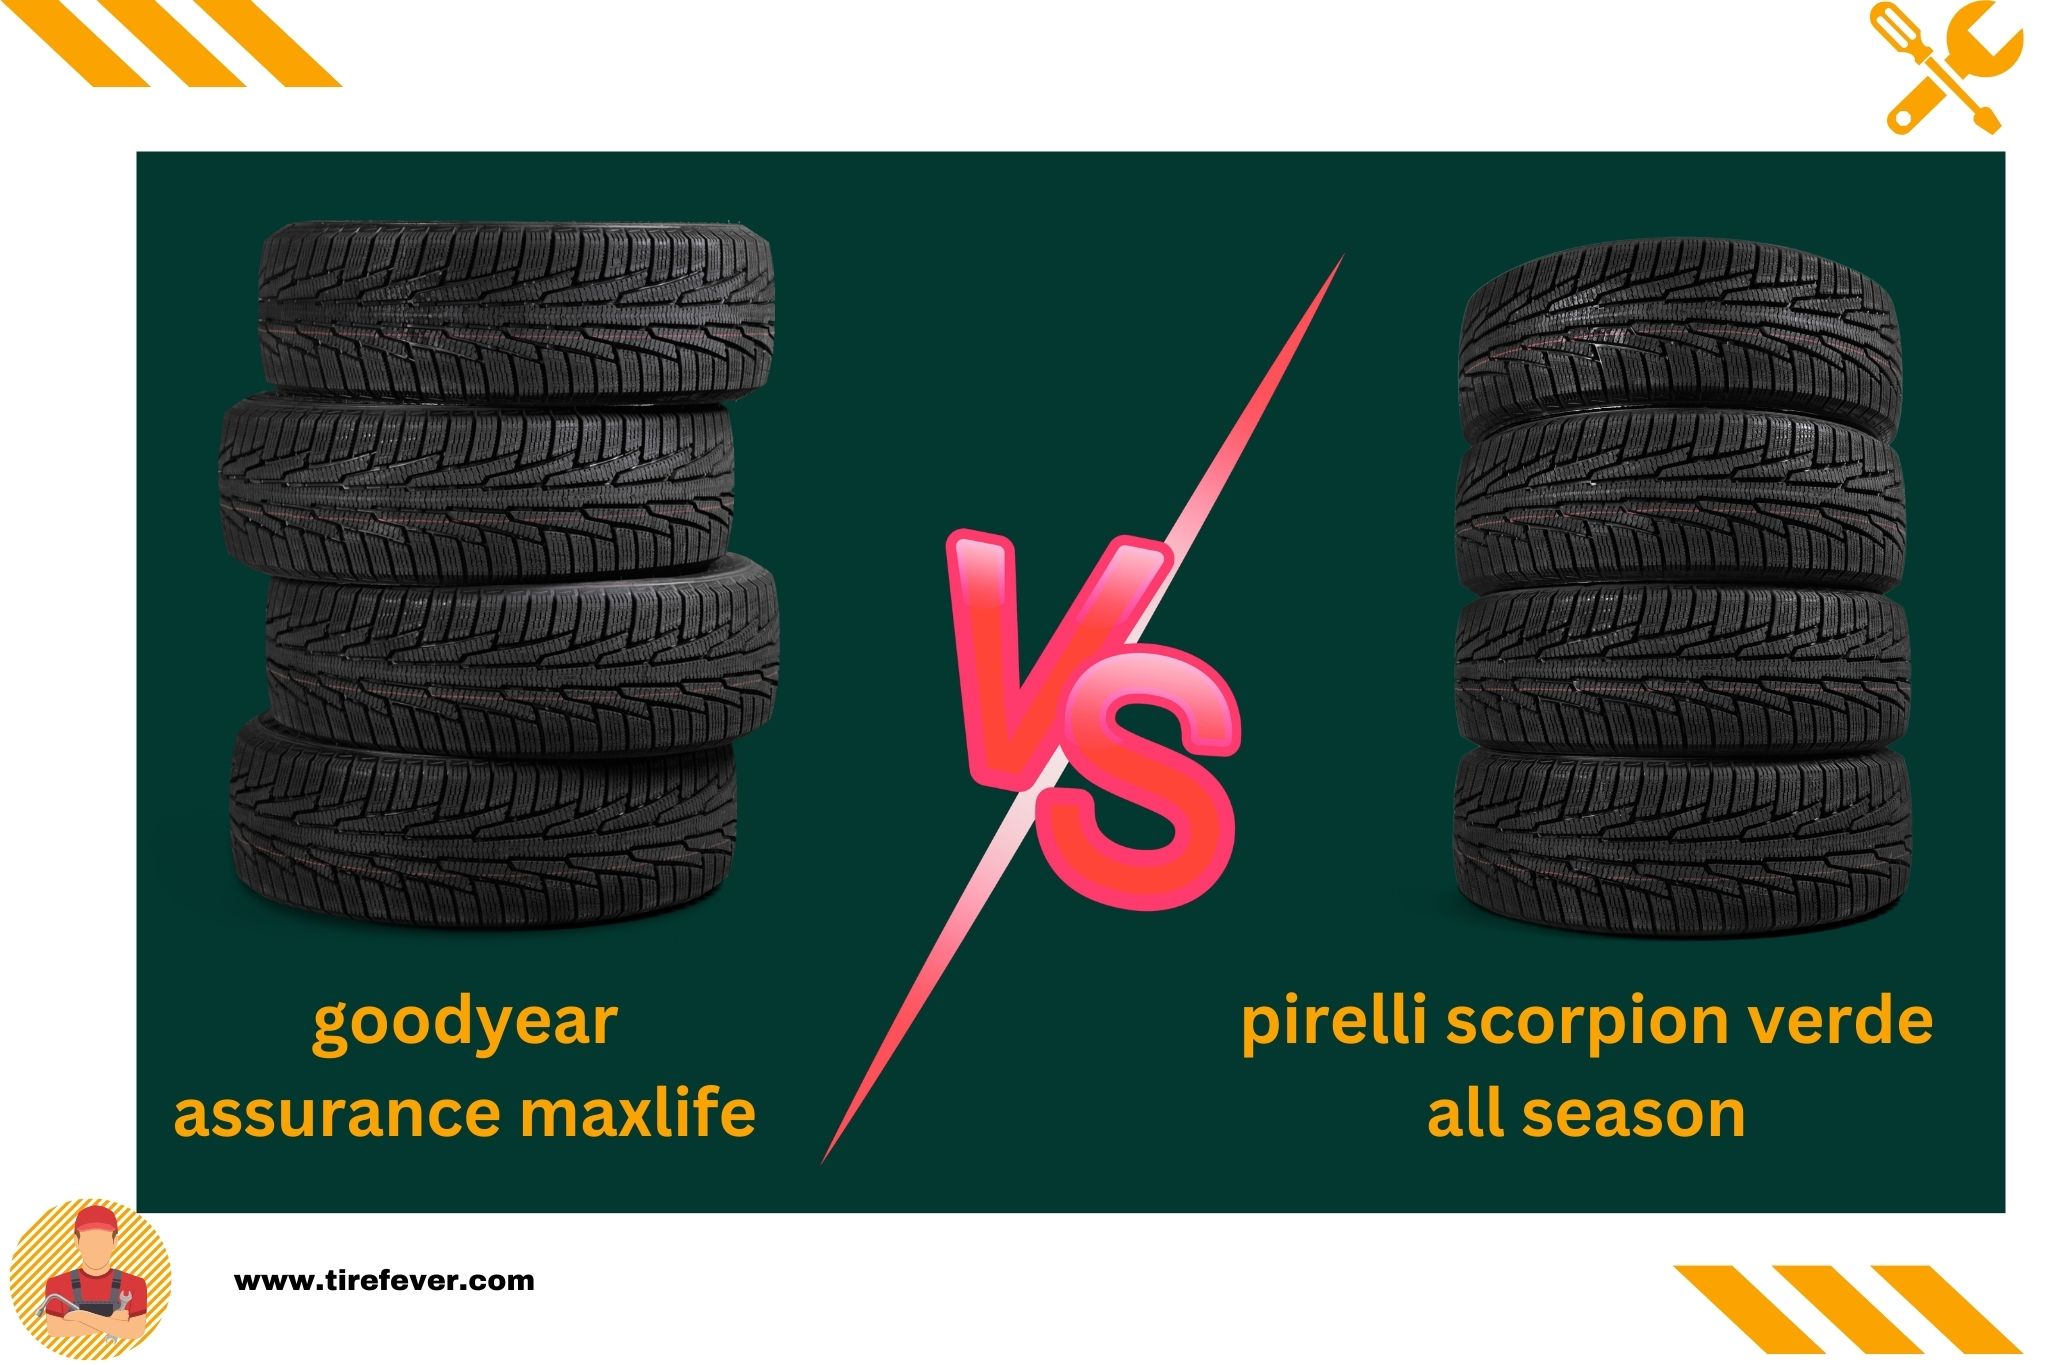 goodyear assurance maxlife vs pirelli scorpion verde all season